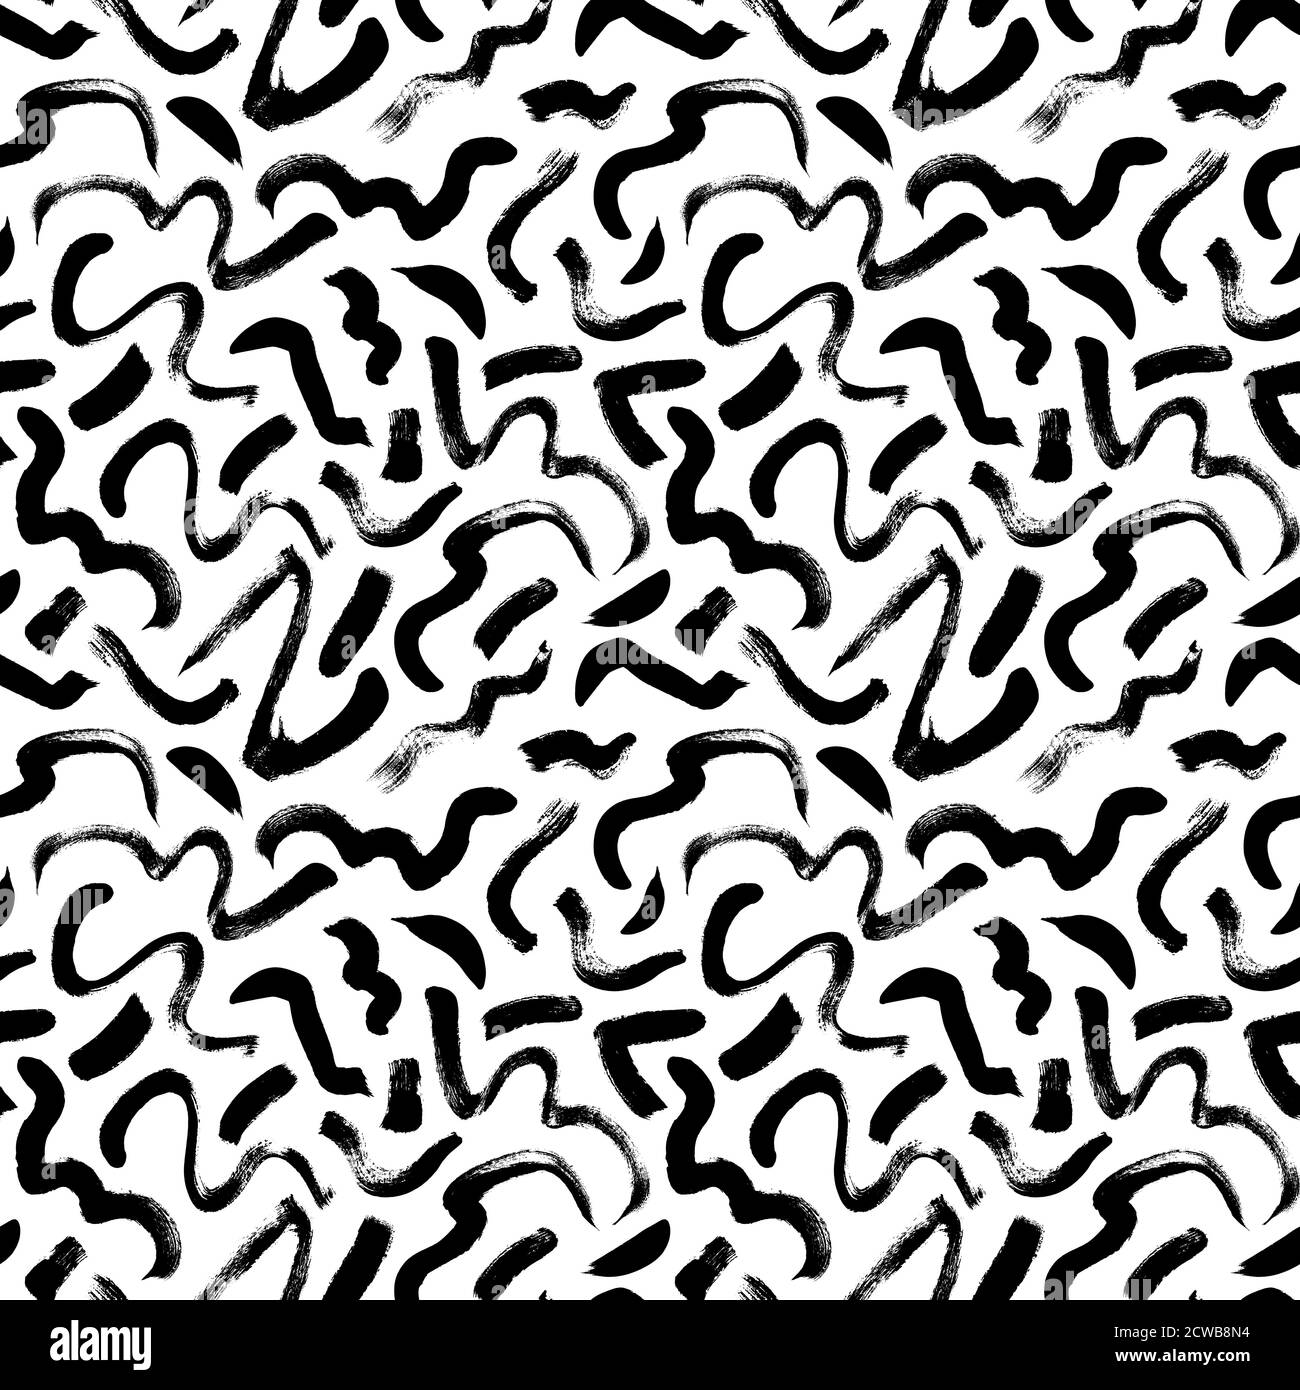 Swirled brush strokes vector seamless pattern. Stock Vector